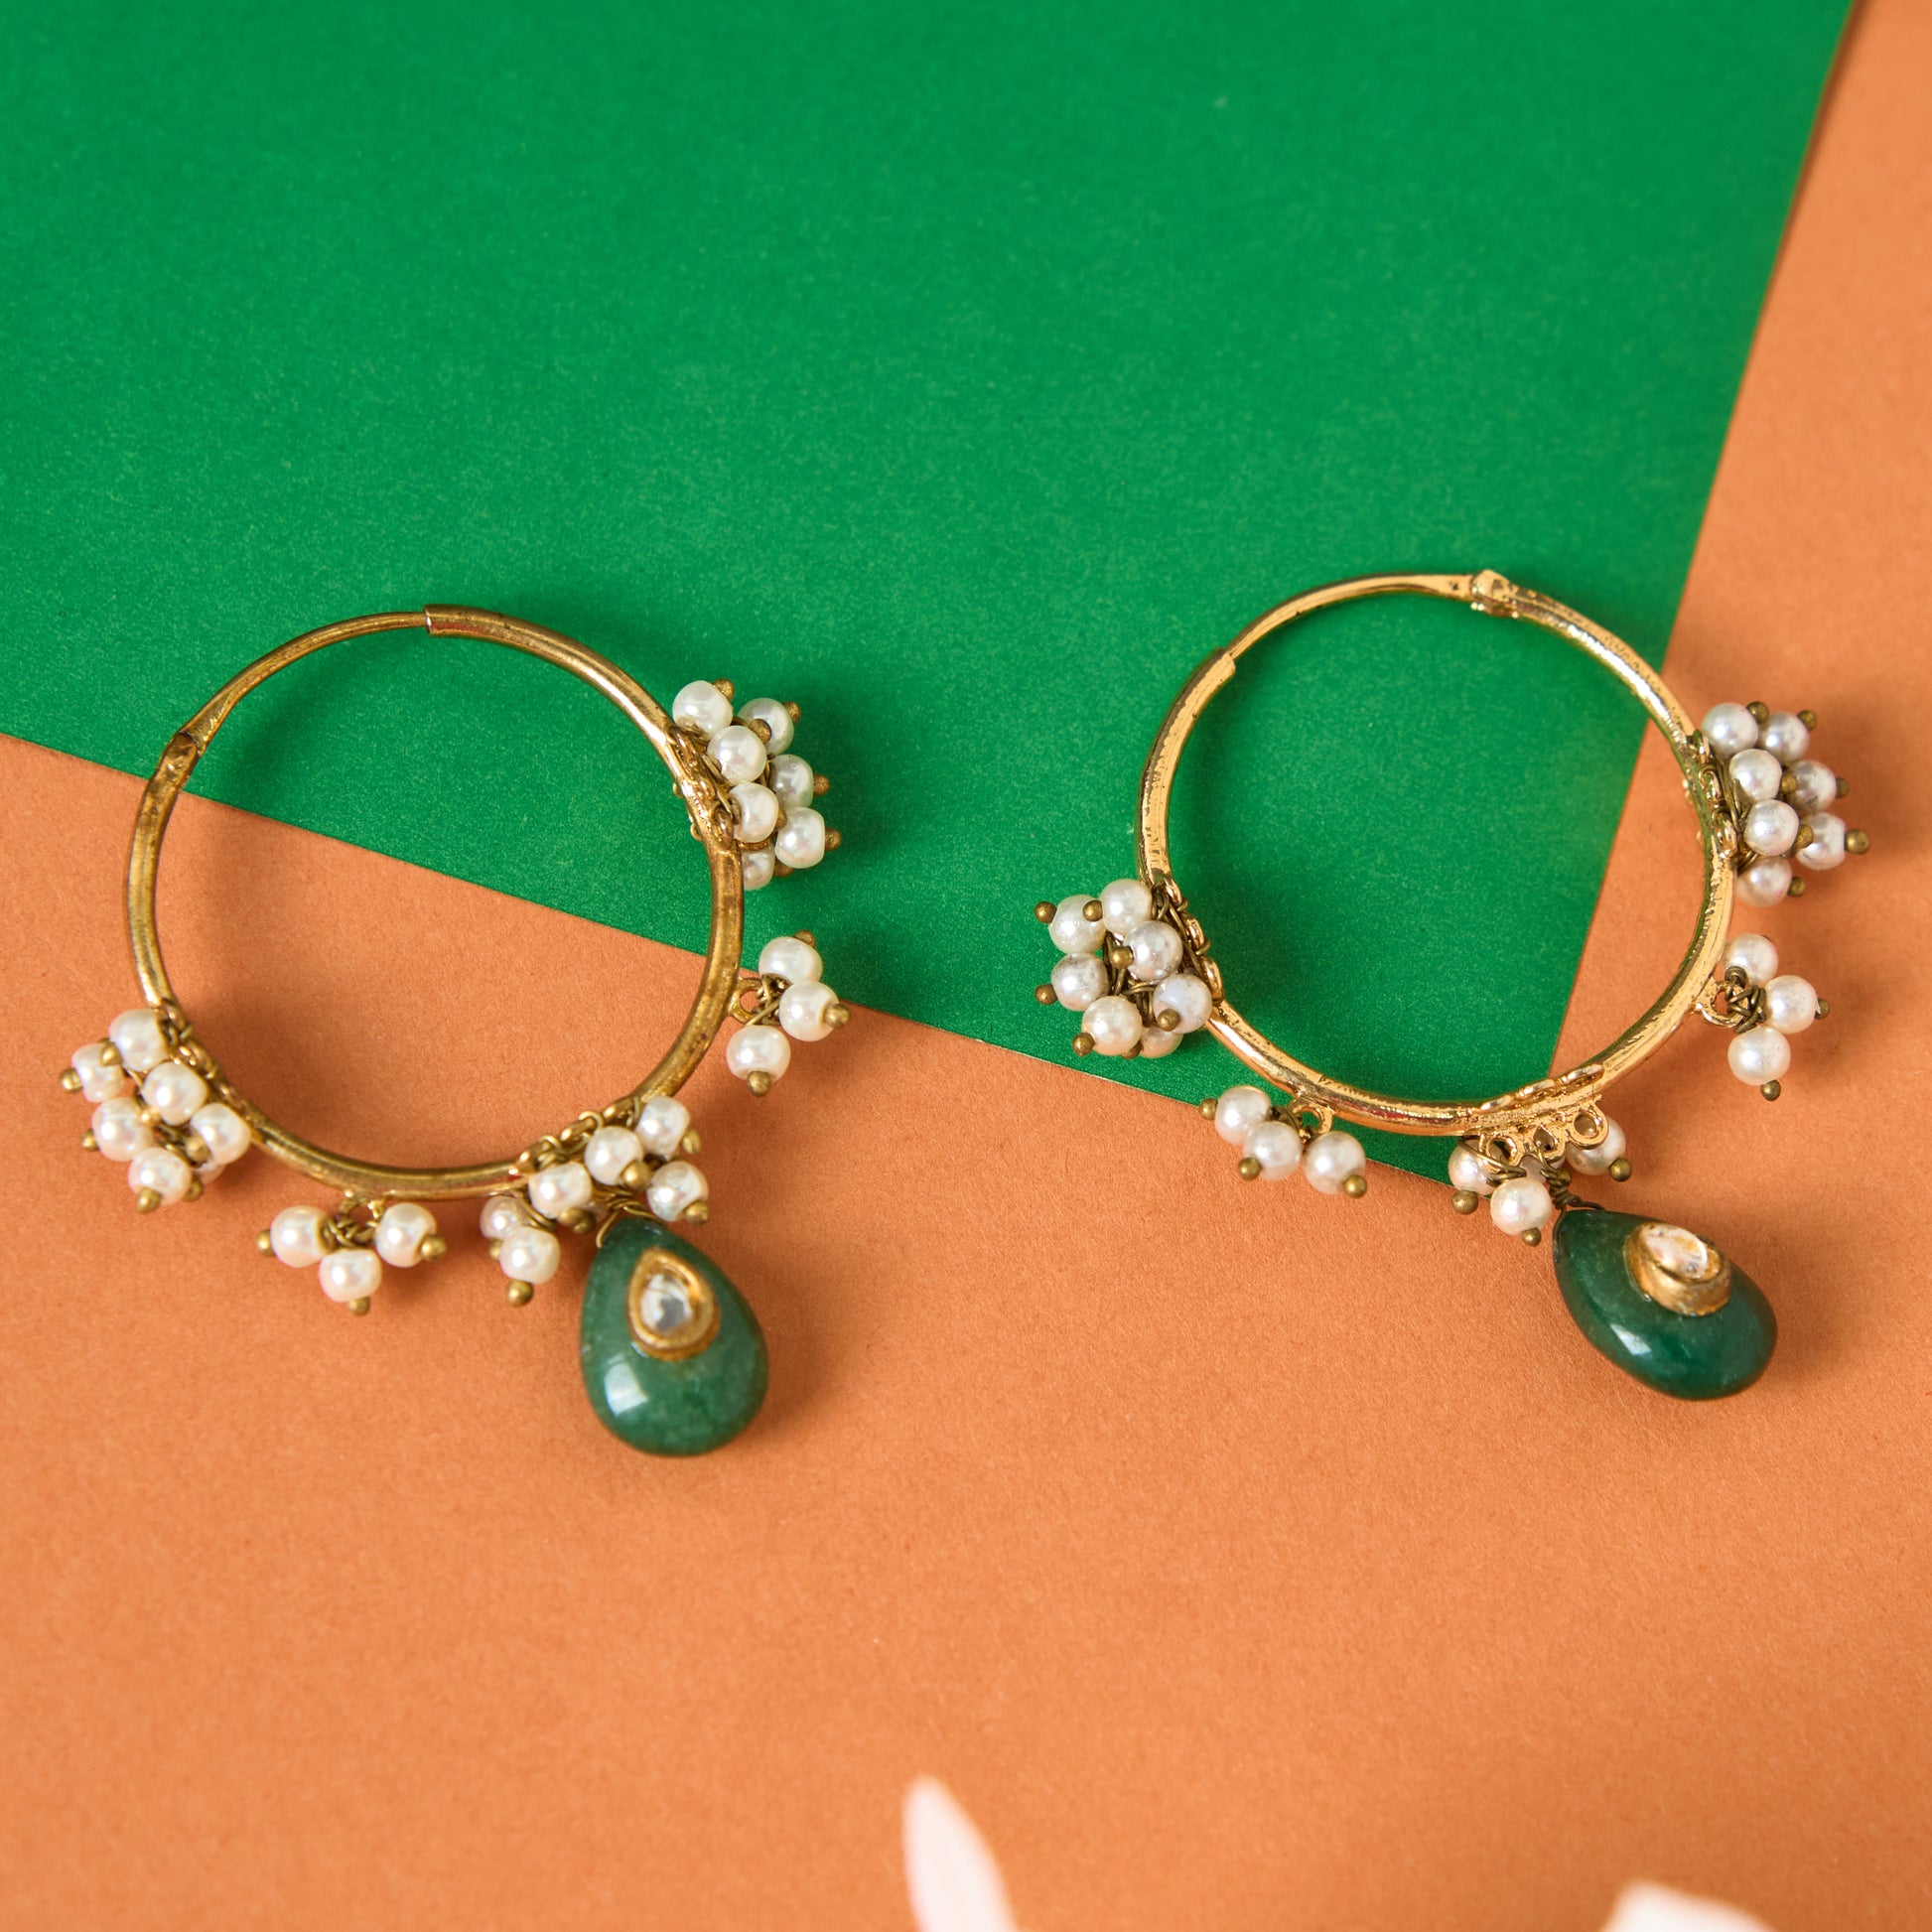 Moonstruck Traditional Hoop Earrings With Pearls for Women (Green) - www.MoonstruckINC.com